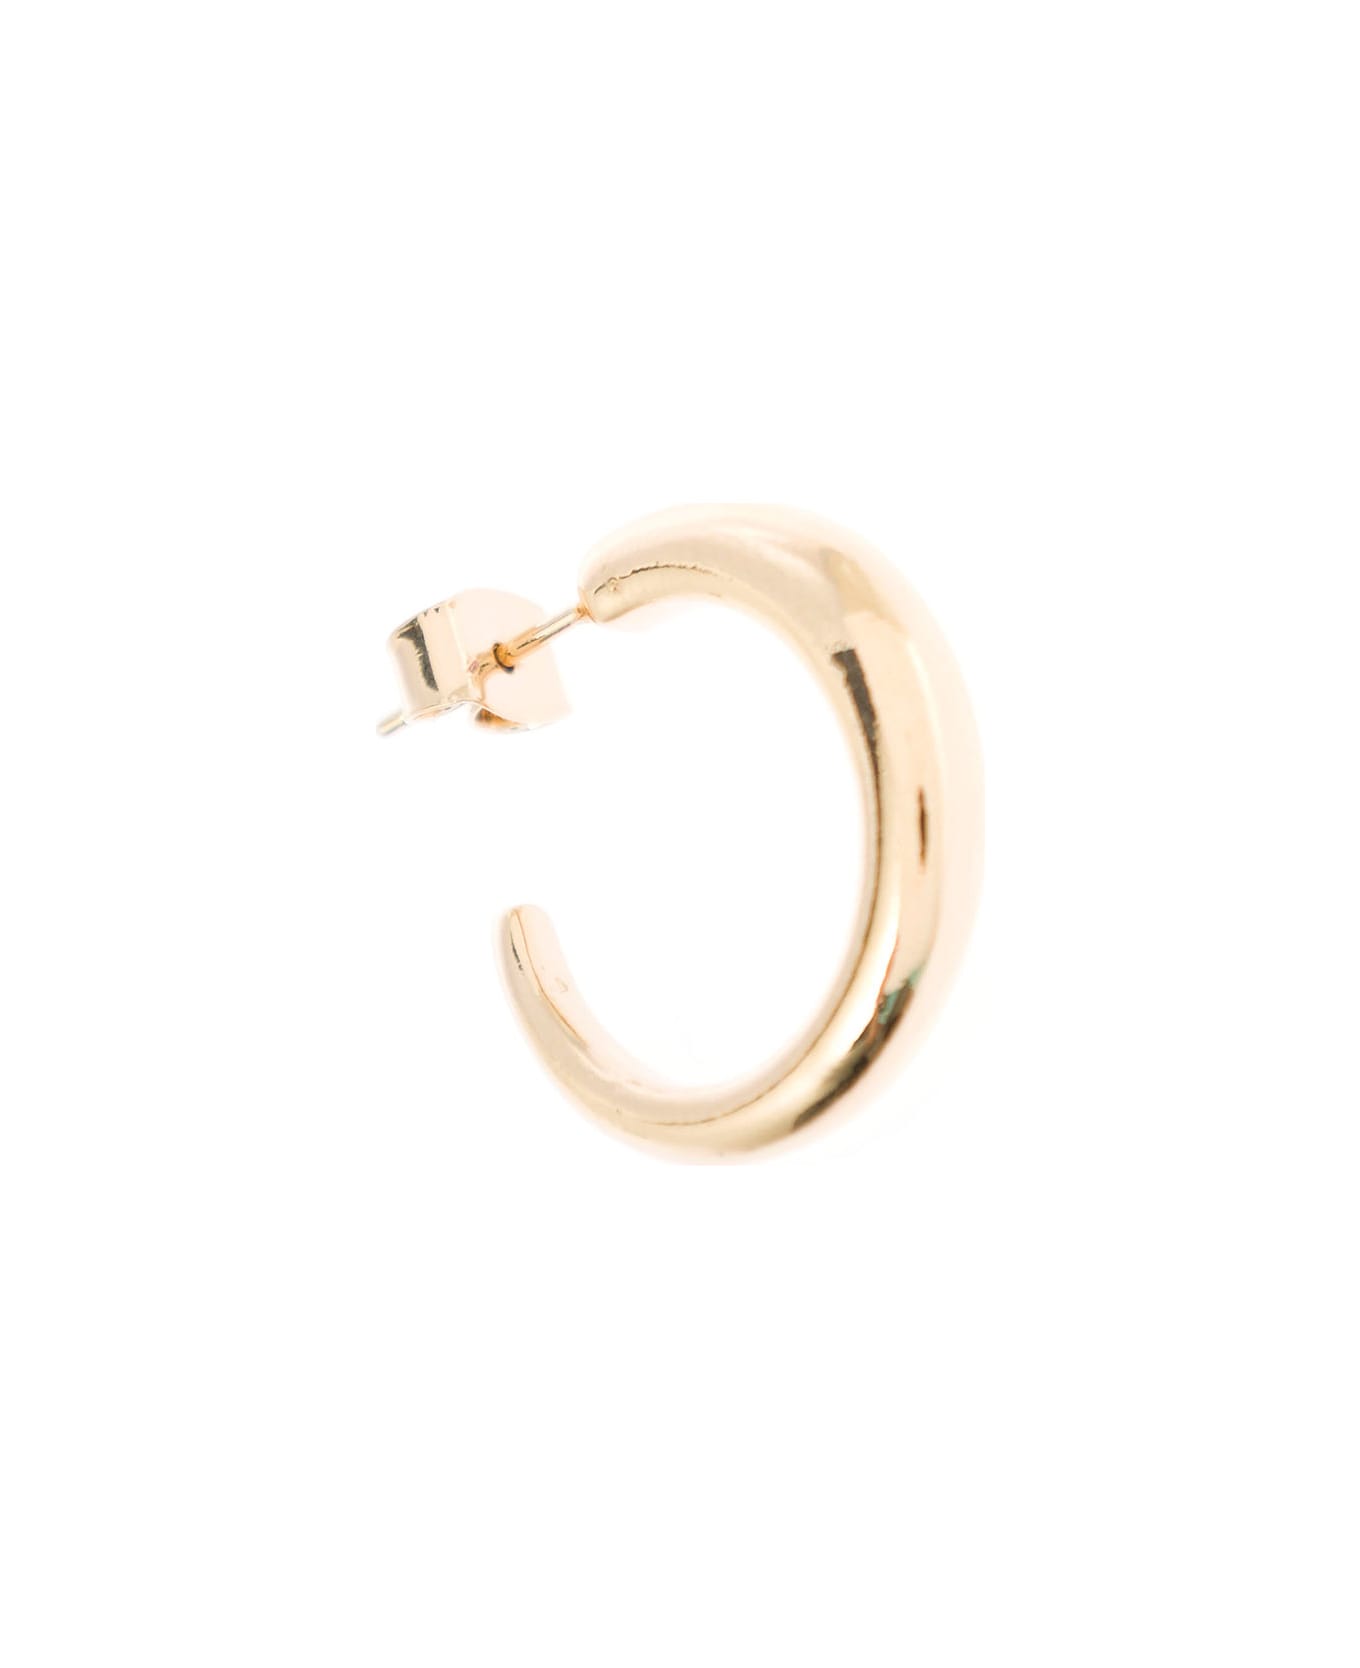 Isabel Marant Woman's  Golden Brass Hoop Earrings - Metallic